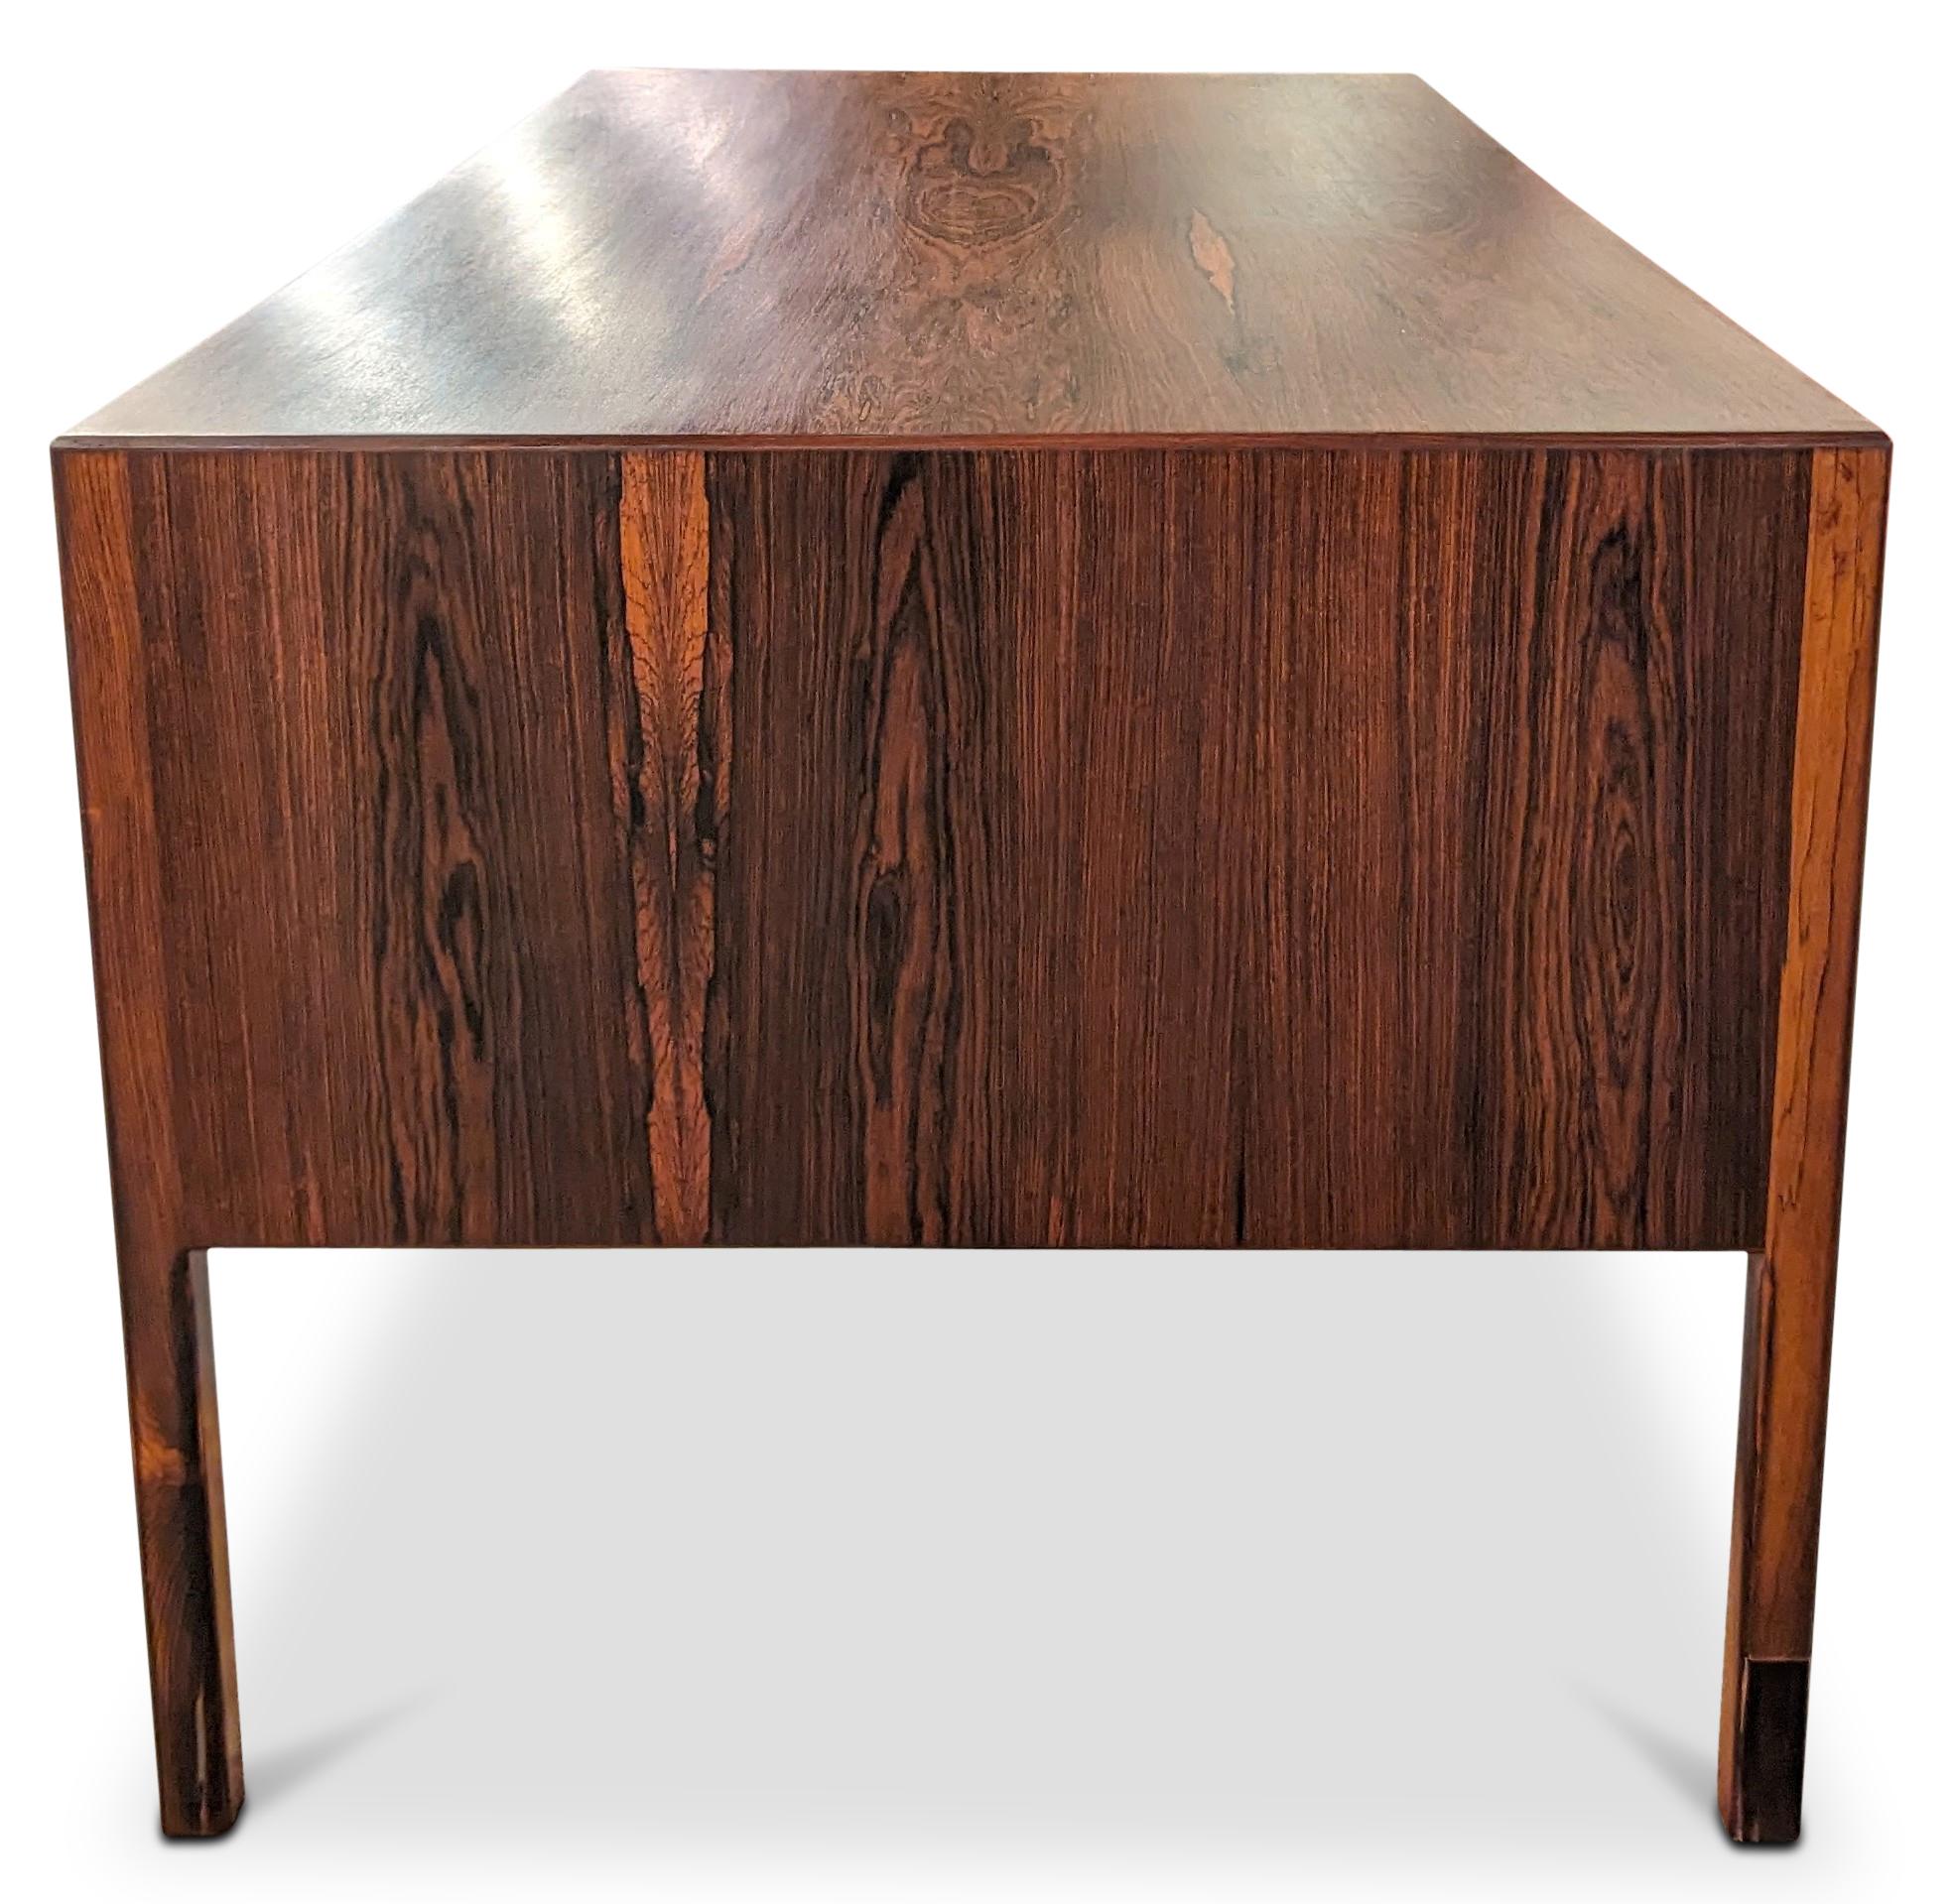 Ole Wancher Rosewood Desk - 0823177 Vintage Danish Mid Century For Sale 7